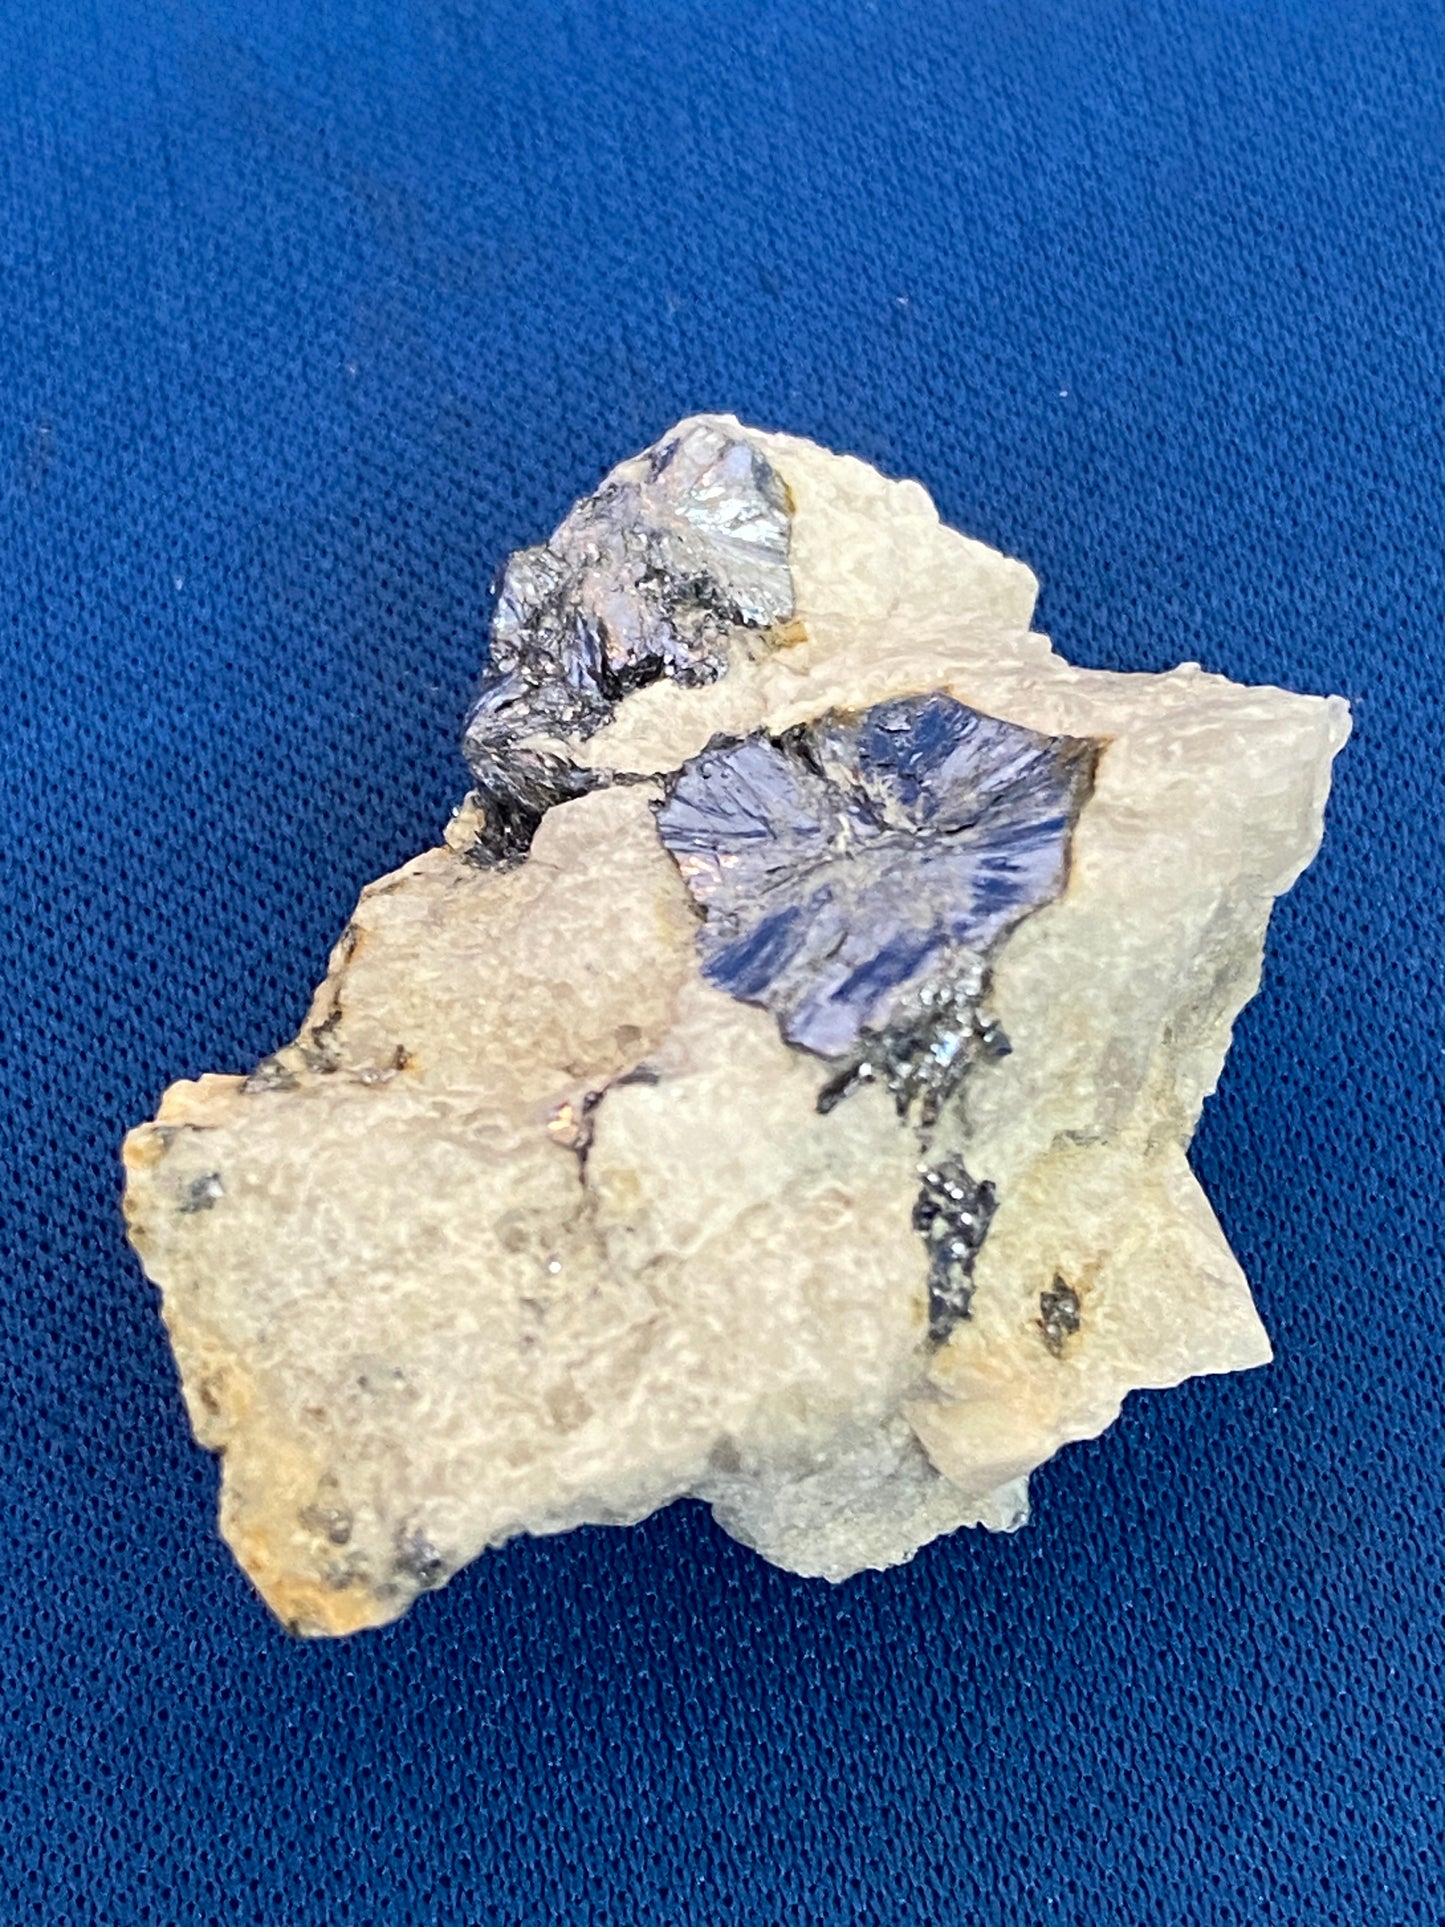 Molybdenite, Boss Mountain Mine, Williams Lake, British Columbia, Canada (Ex Prosper J. Williams)